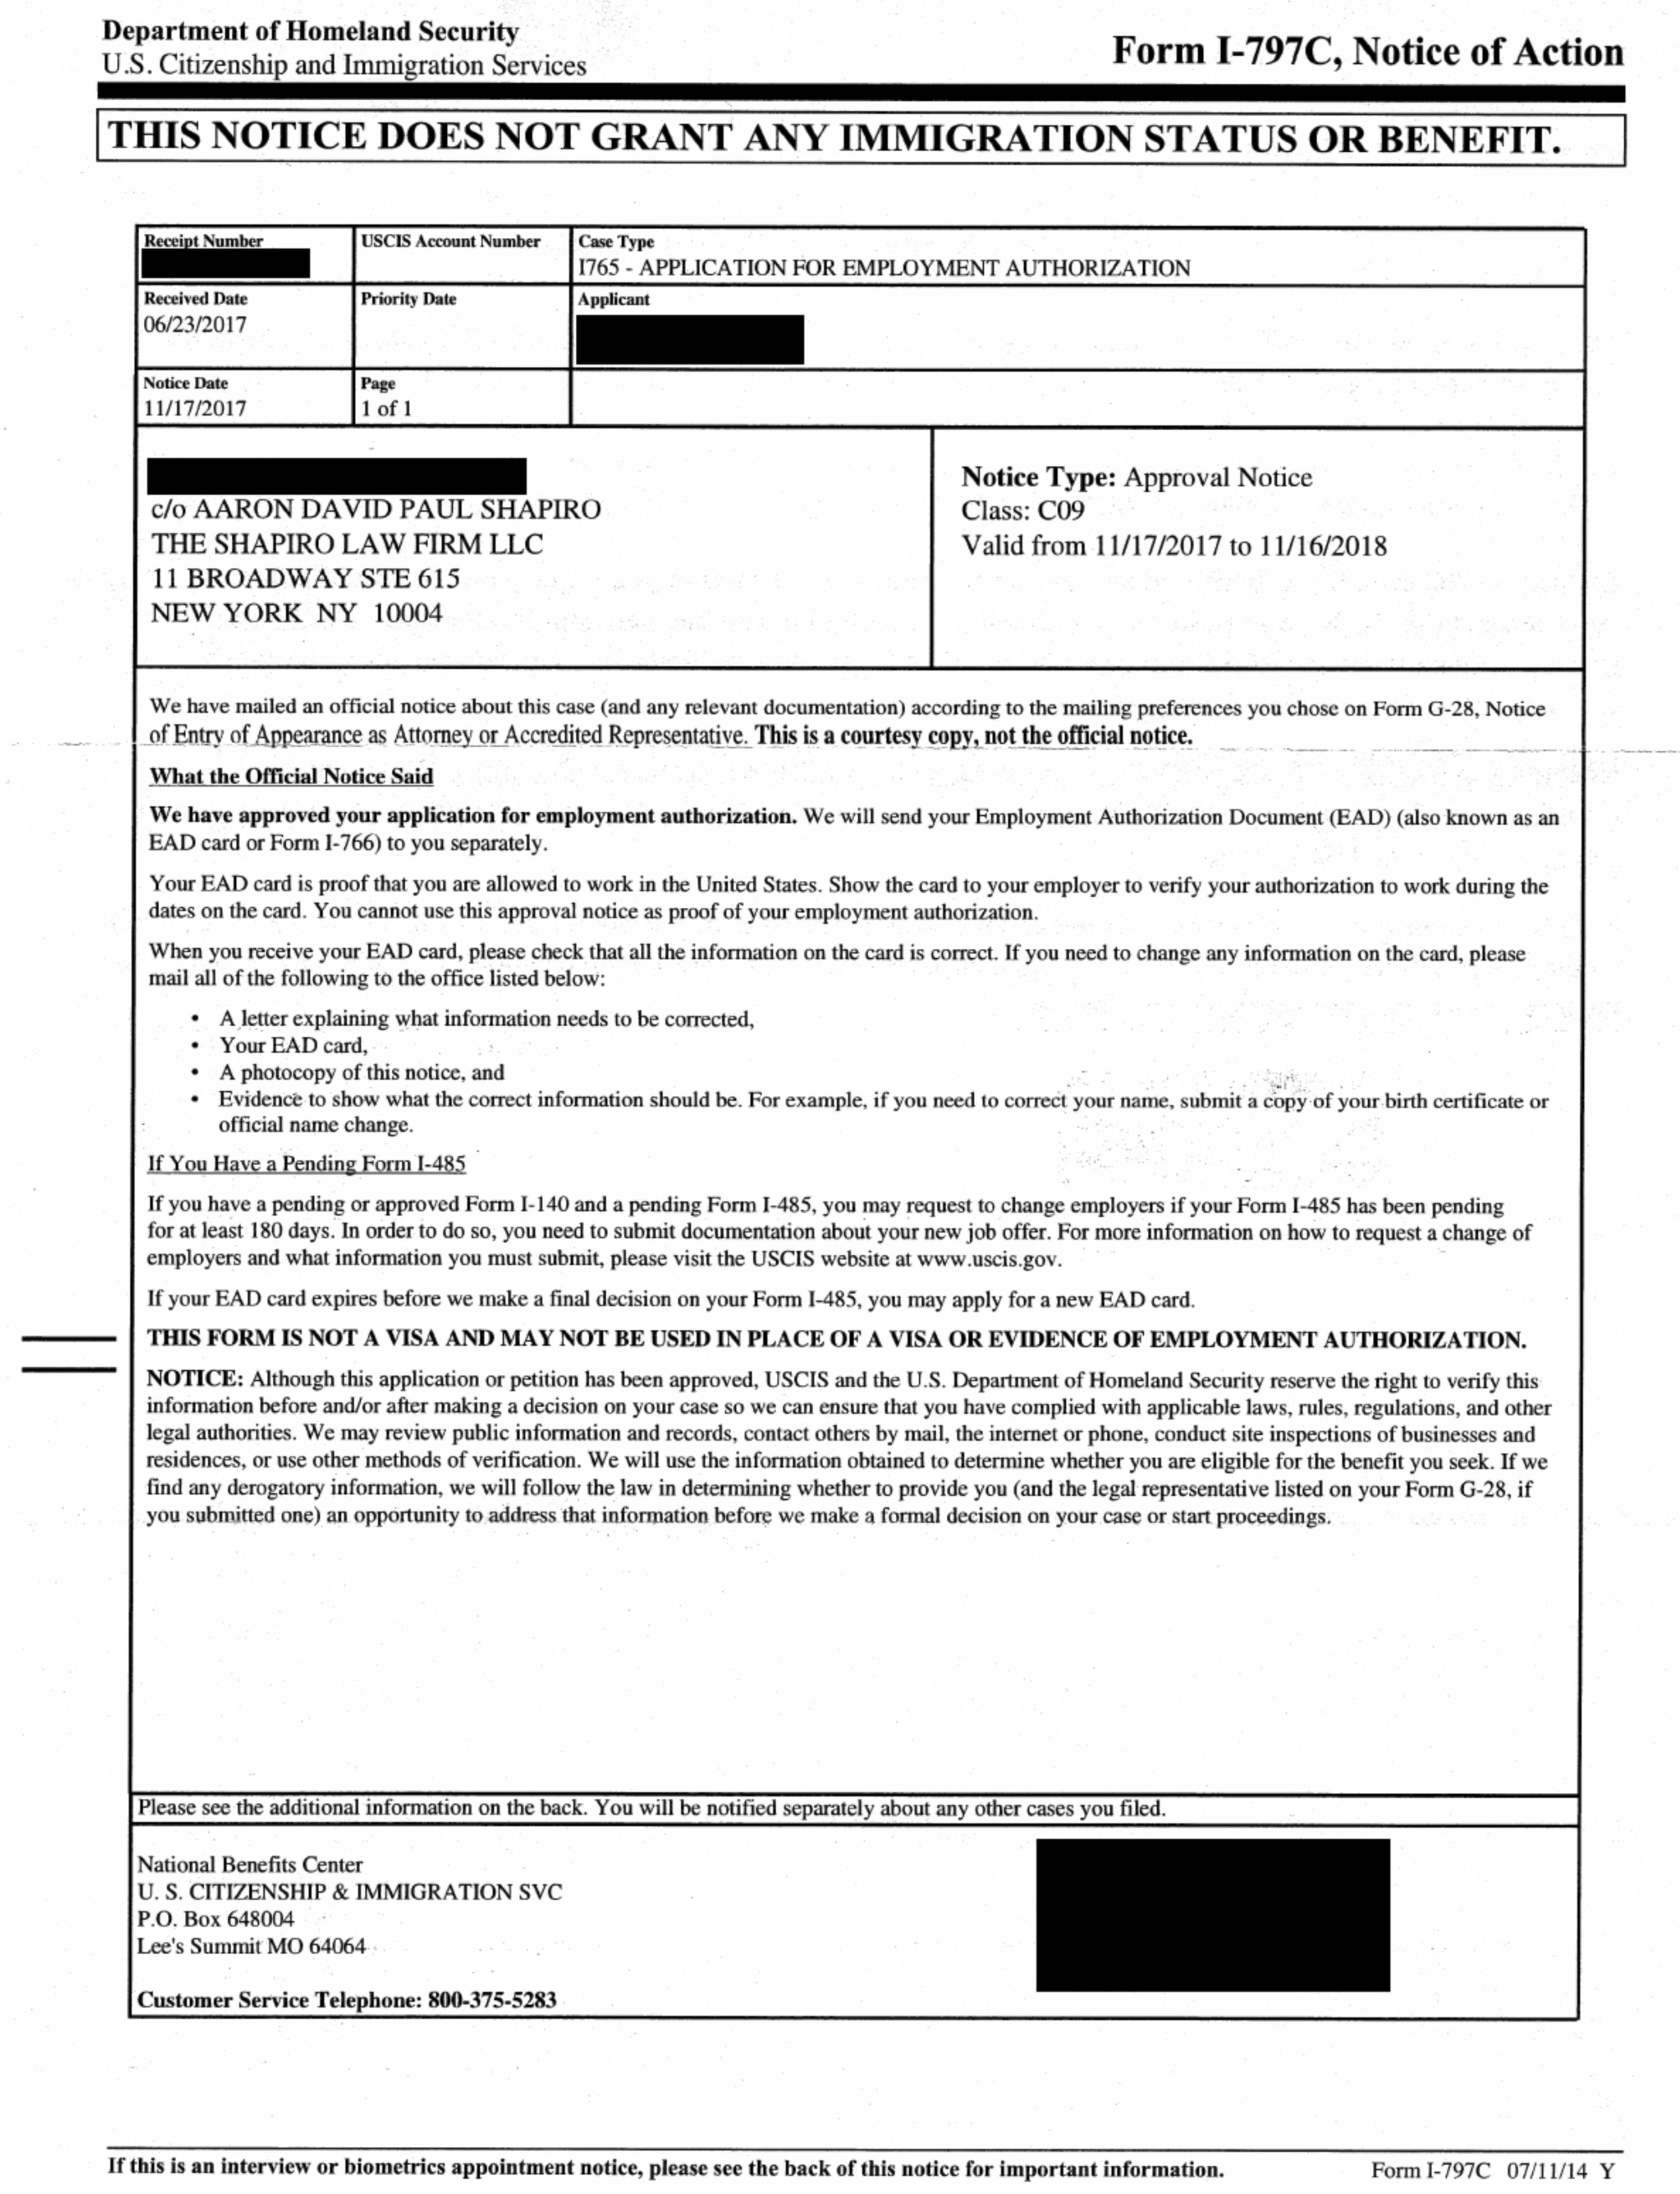 Form I-797C, I-765 Approval Notice